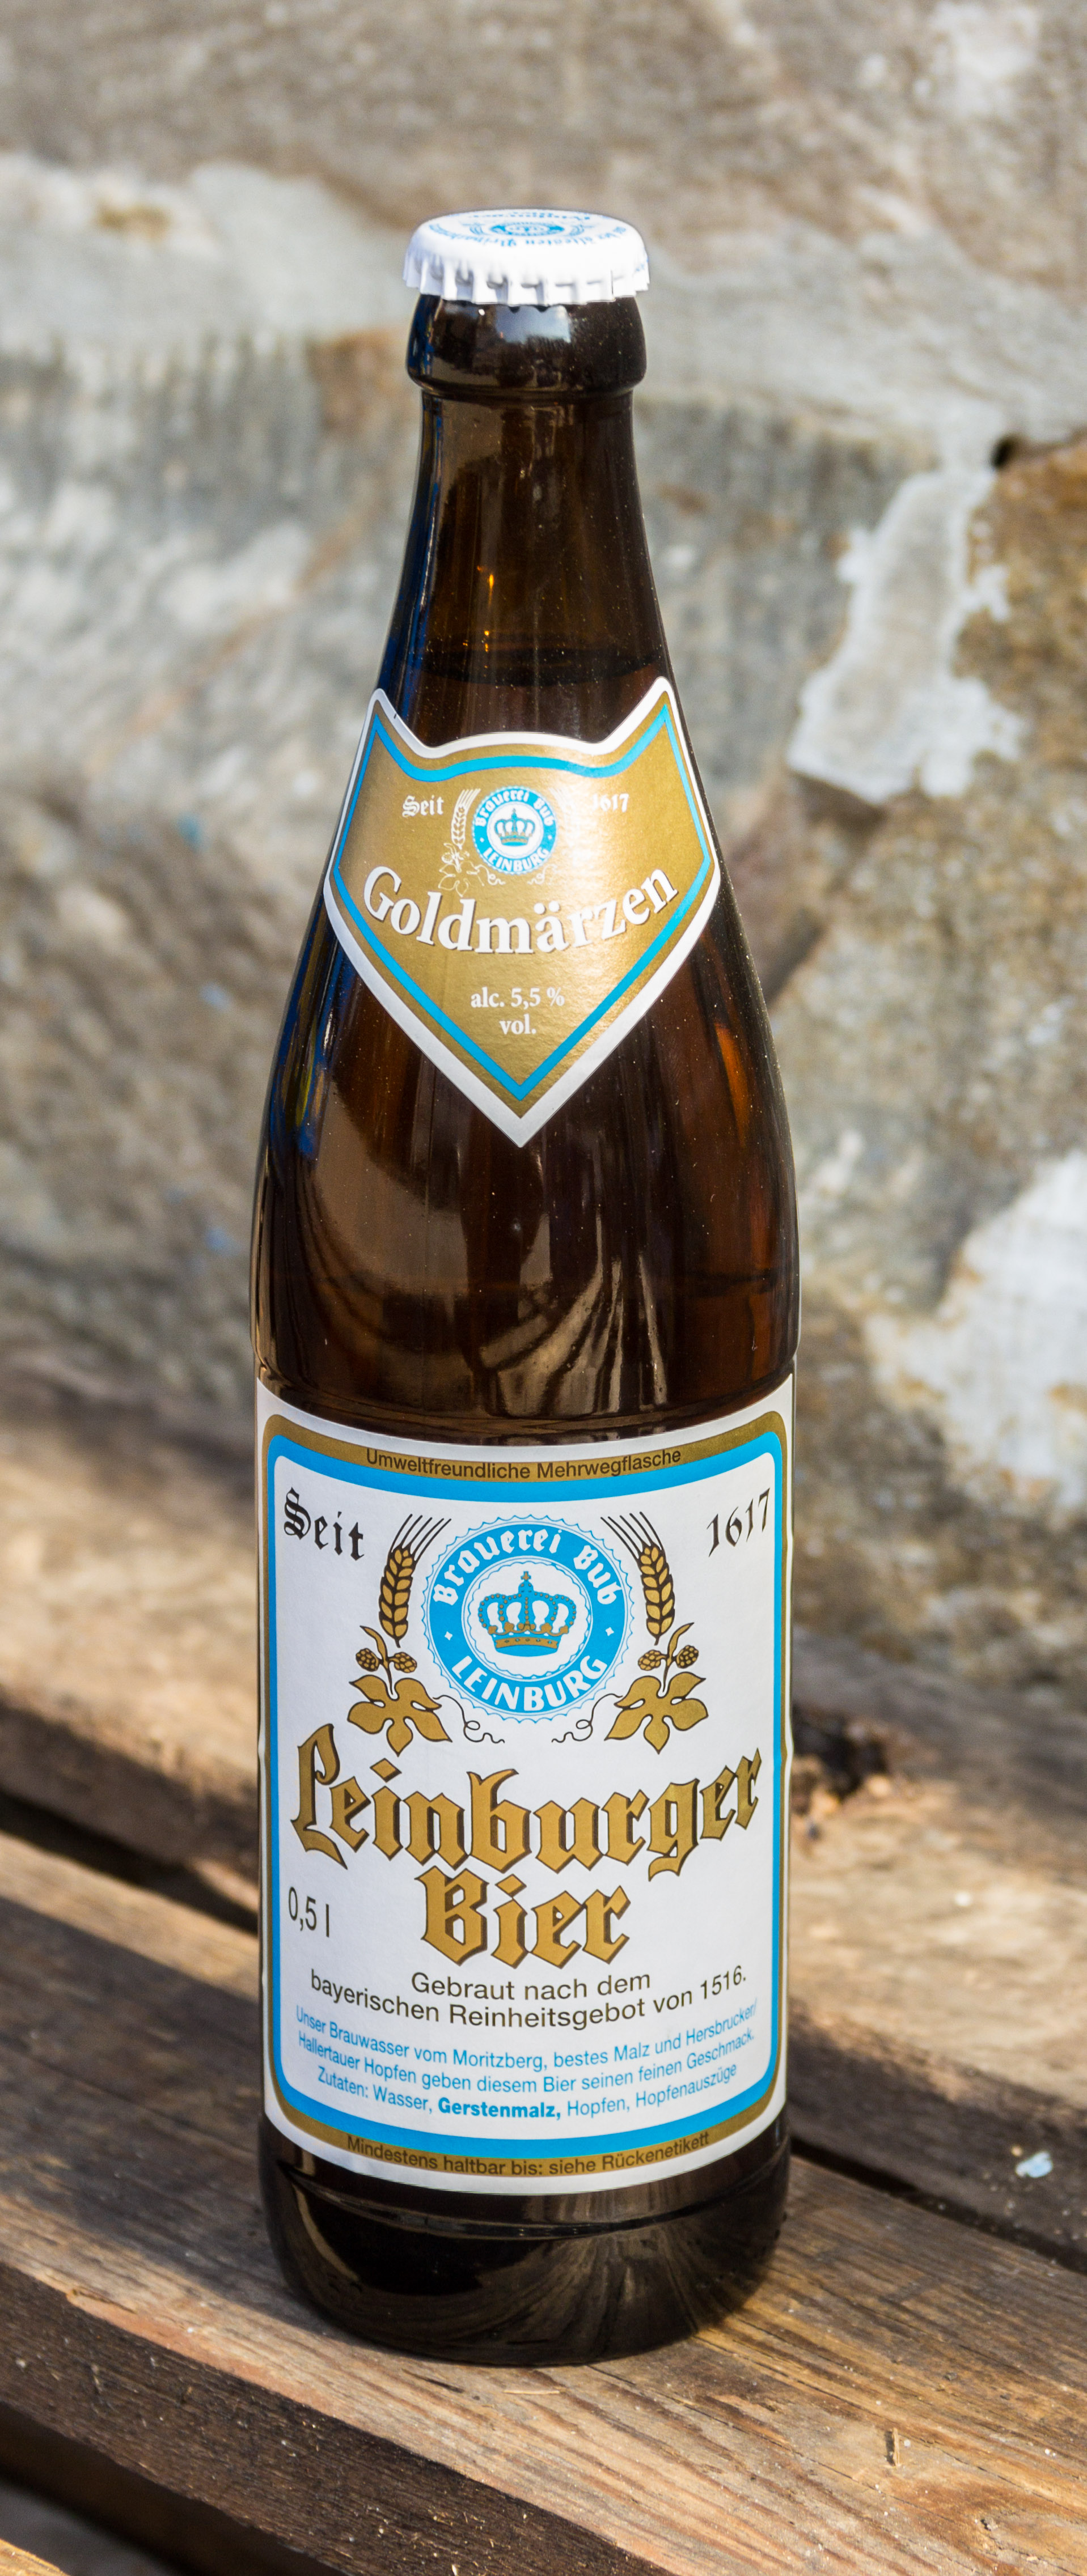 File:2016 Leinburger Bier - Wikimedia